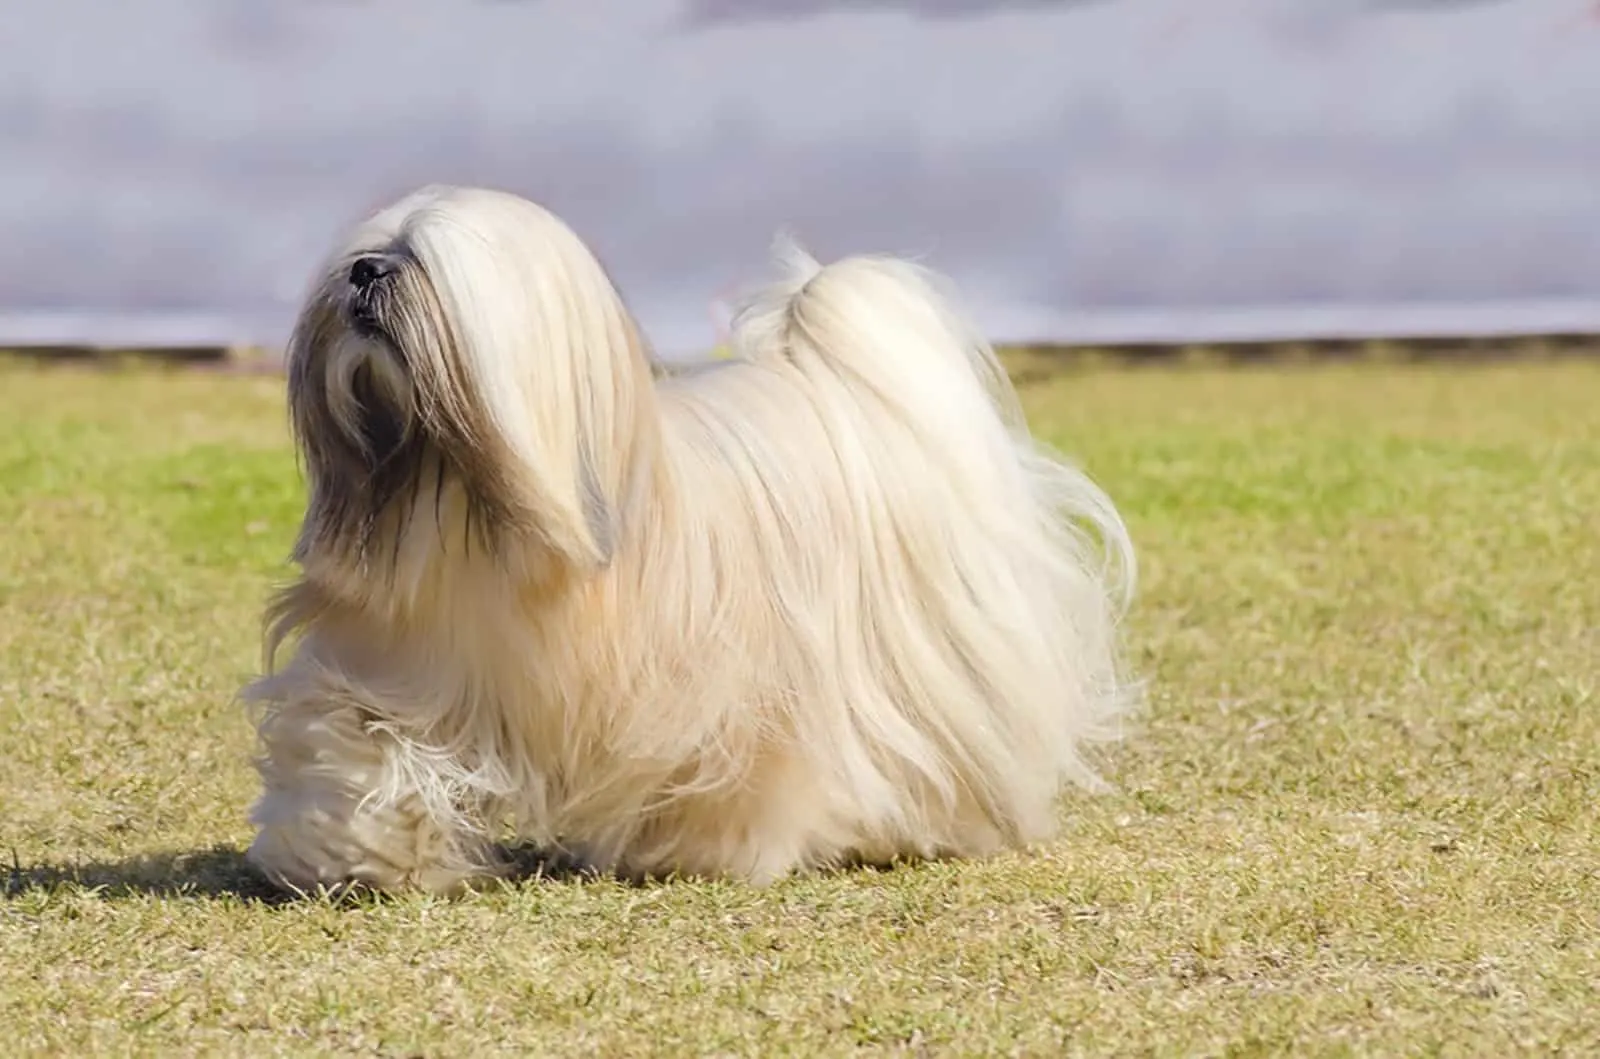 lhasa apso dog walking on the grass